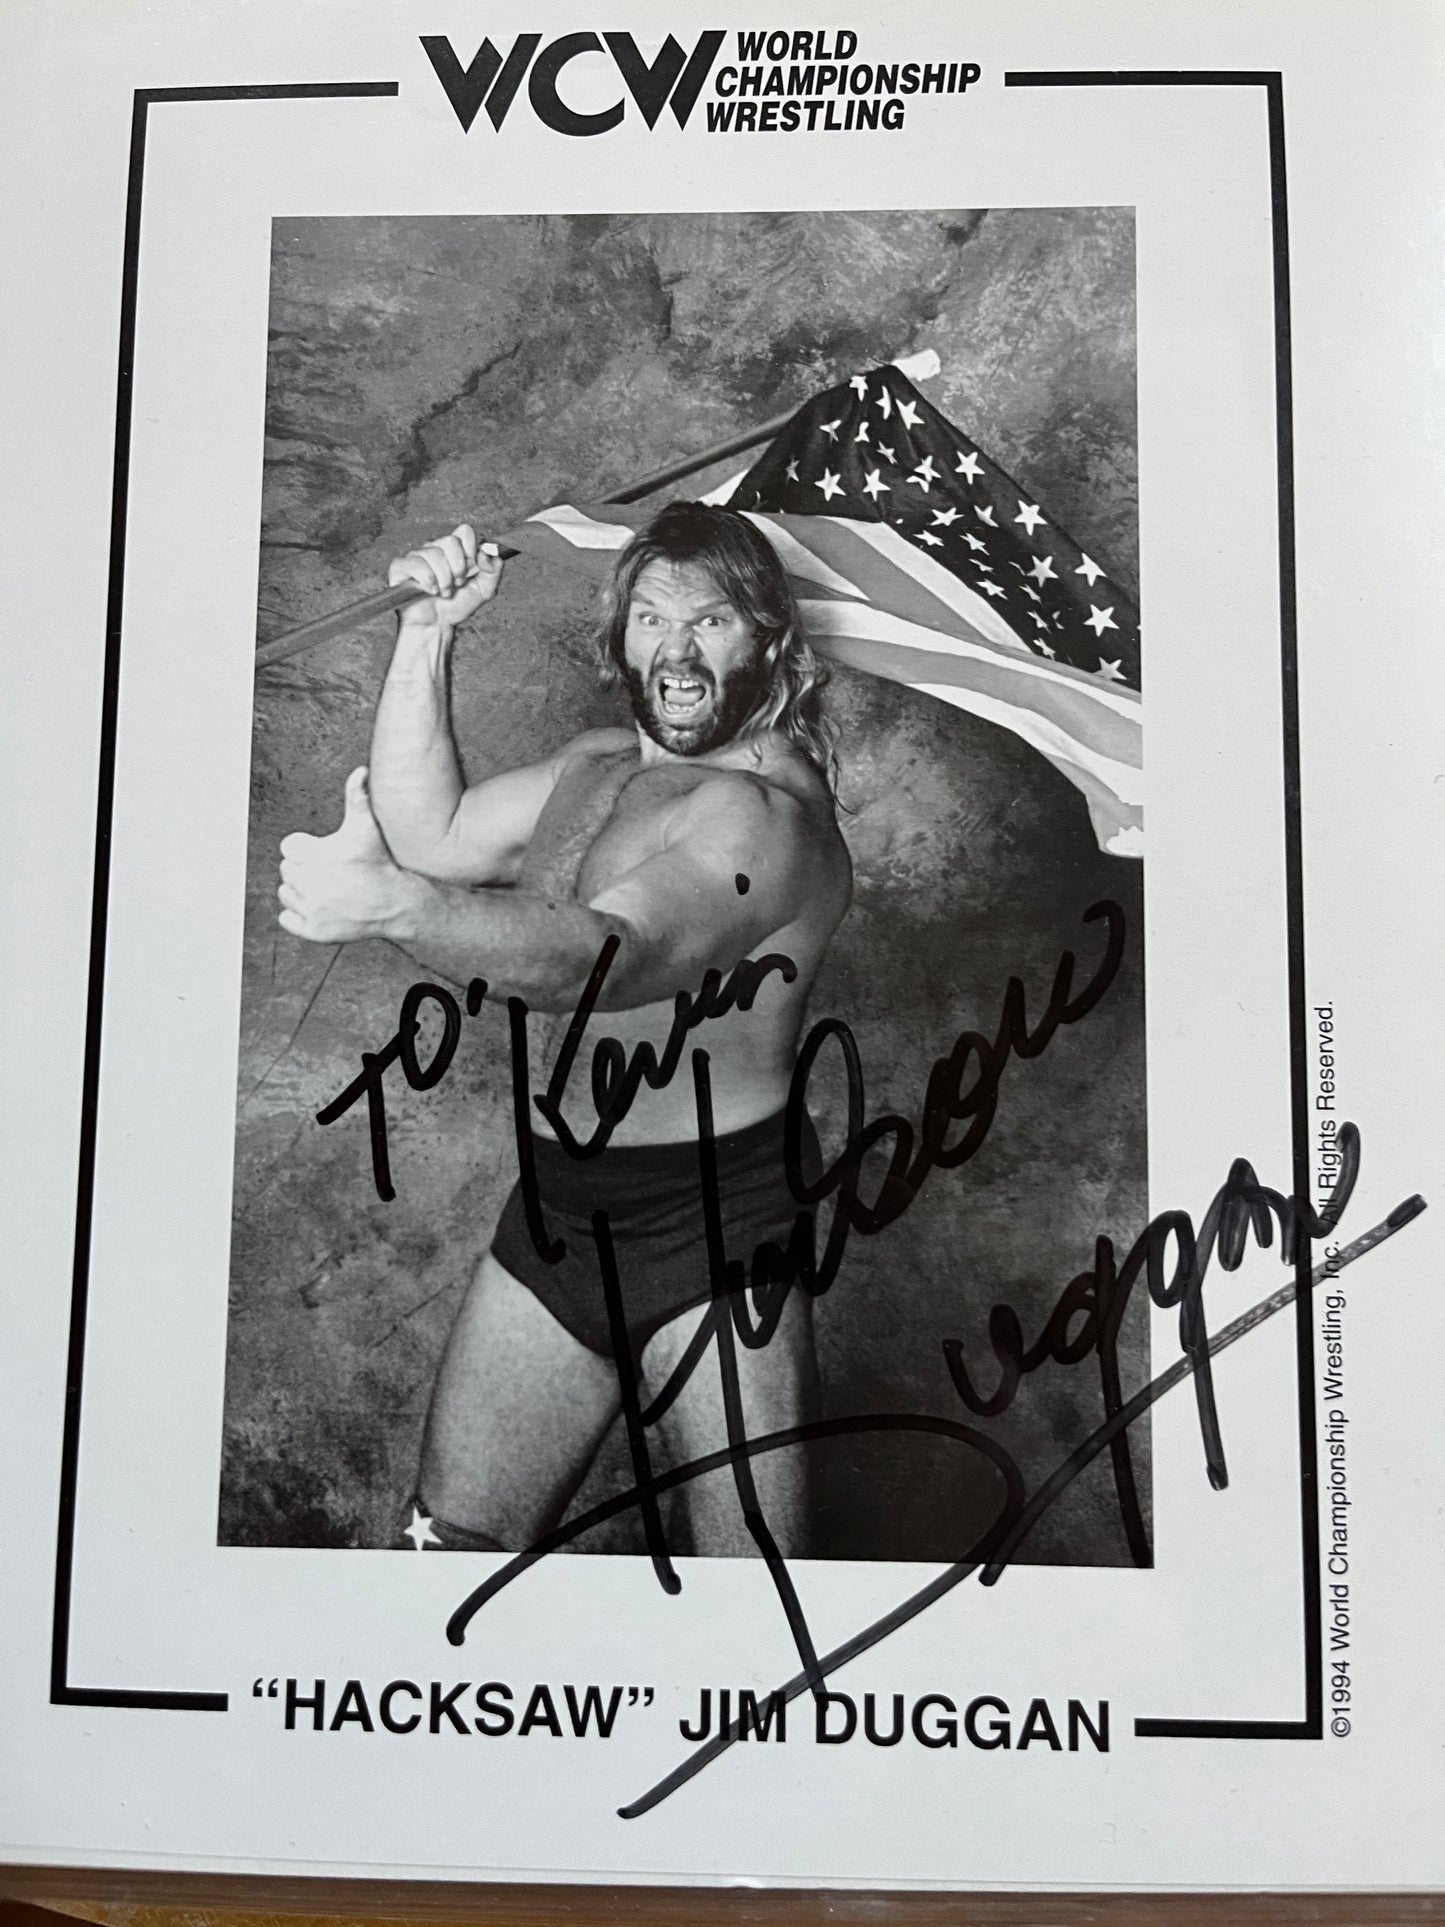 "HACKSAW" JIM DUGGAN, Wrestler, autograph